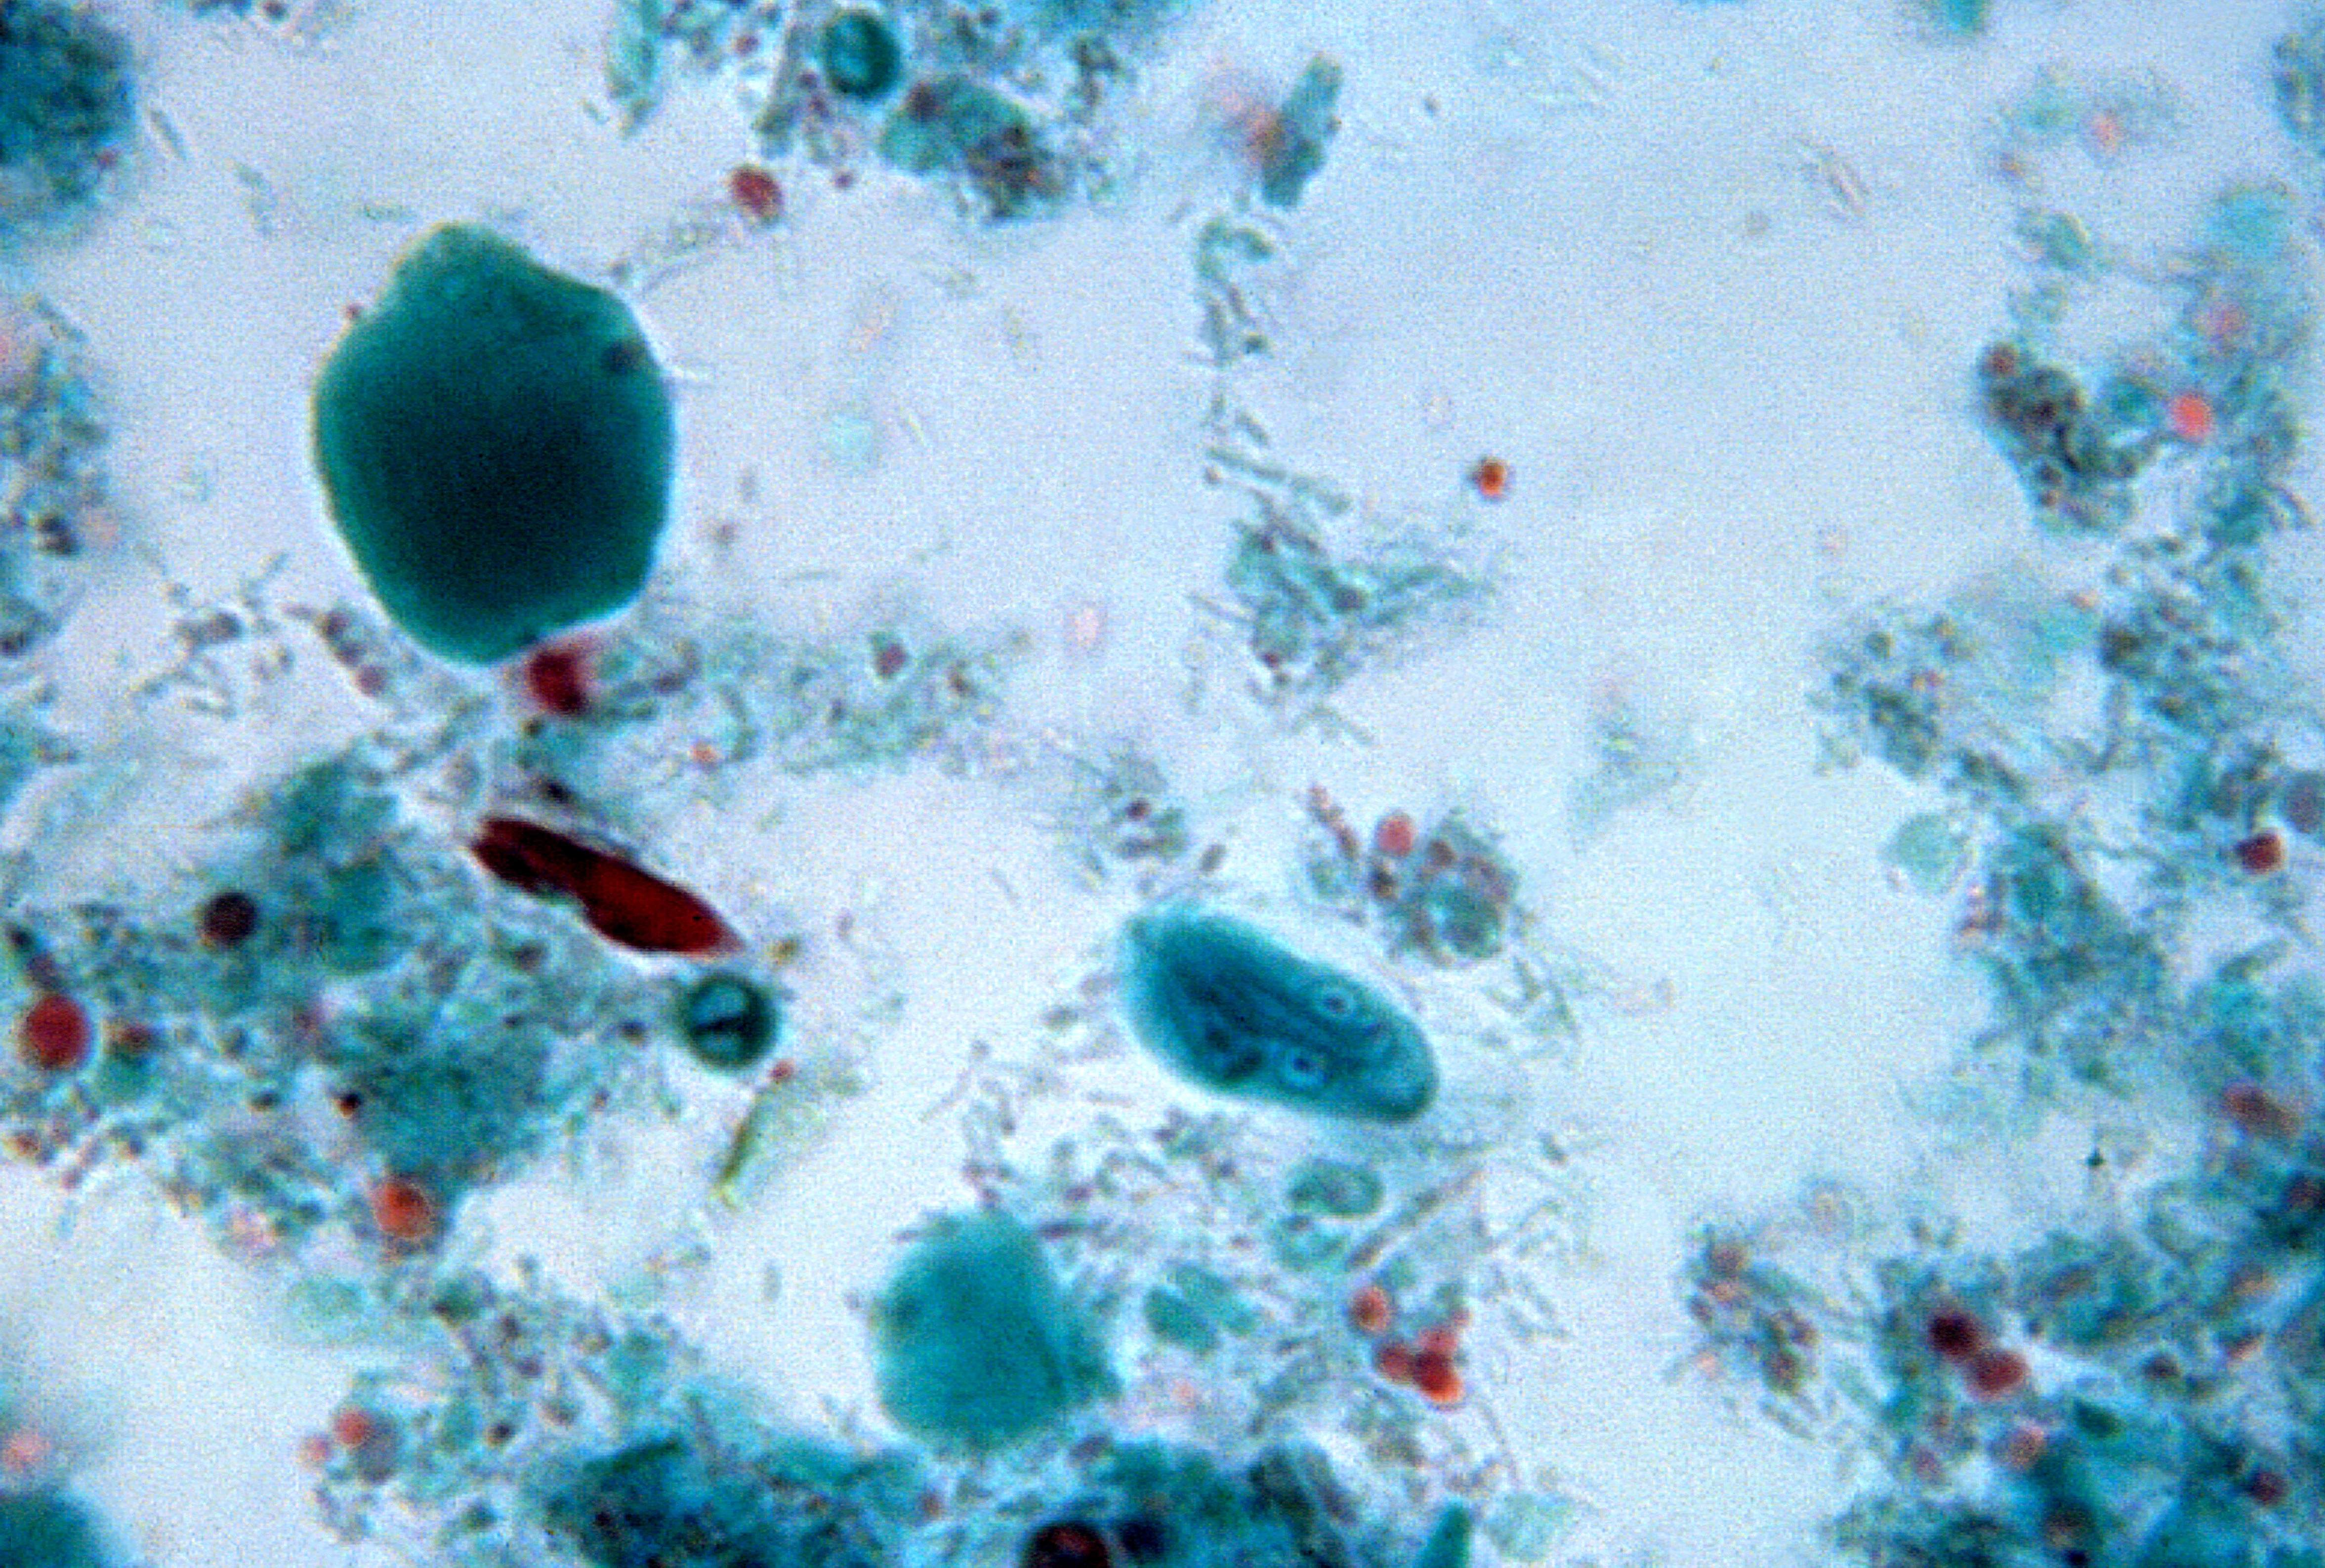 humán papillomavírus verruca vulgaris hpv gyalog